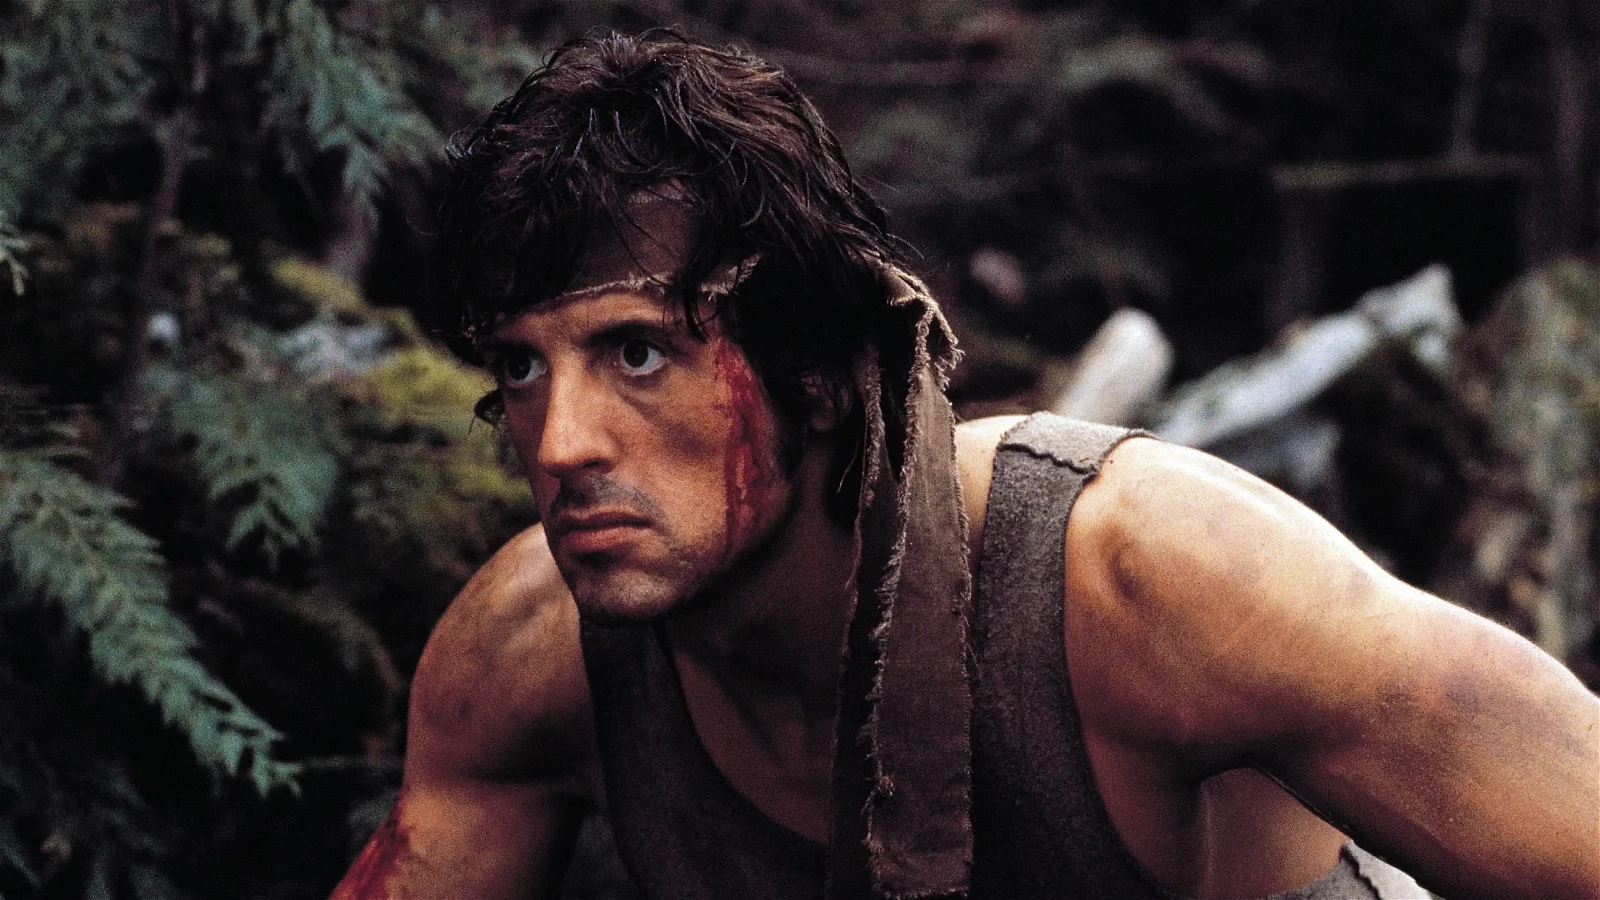 Sylvester Stallone in Rambo